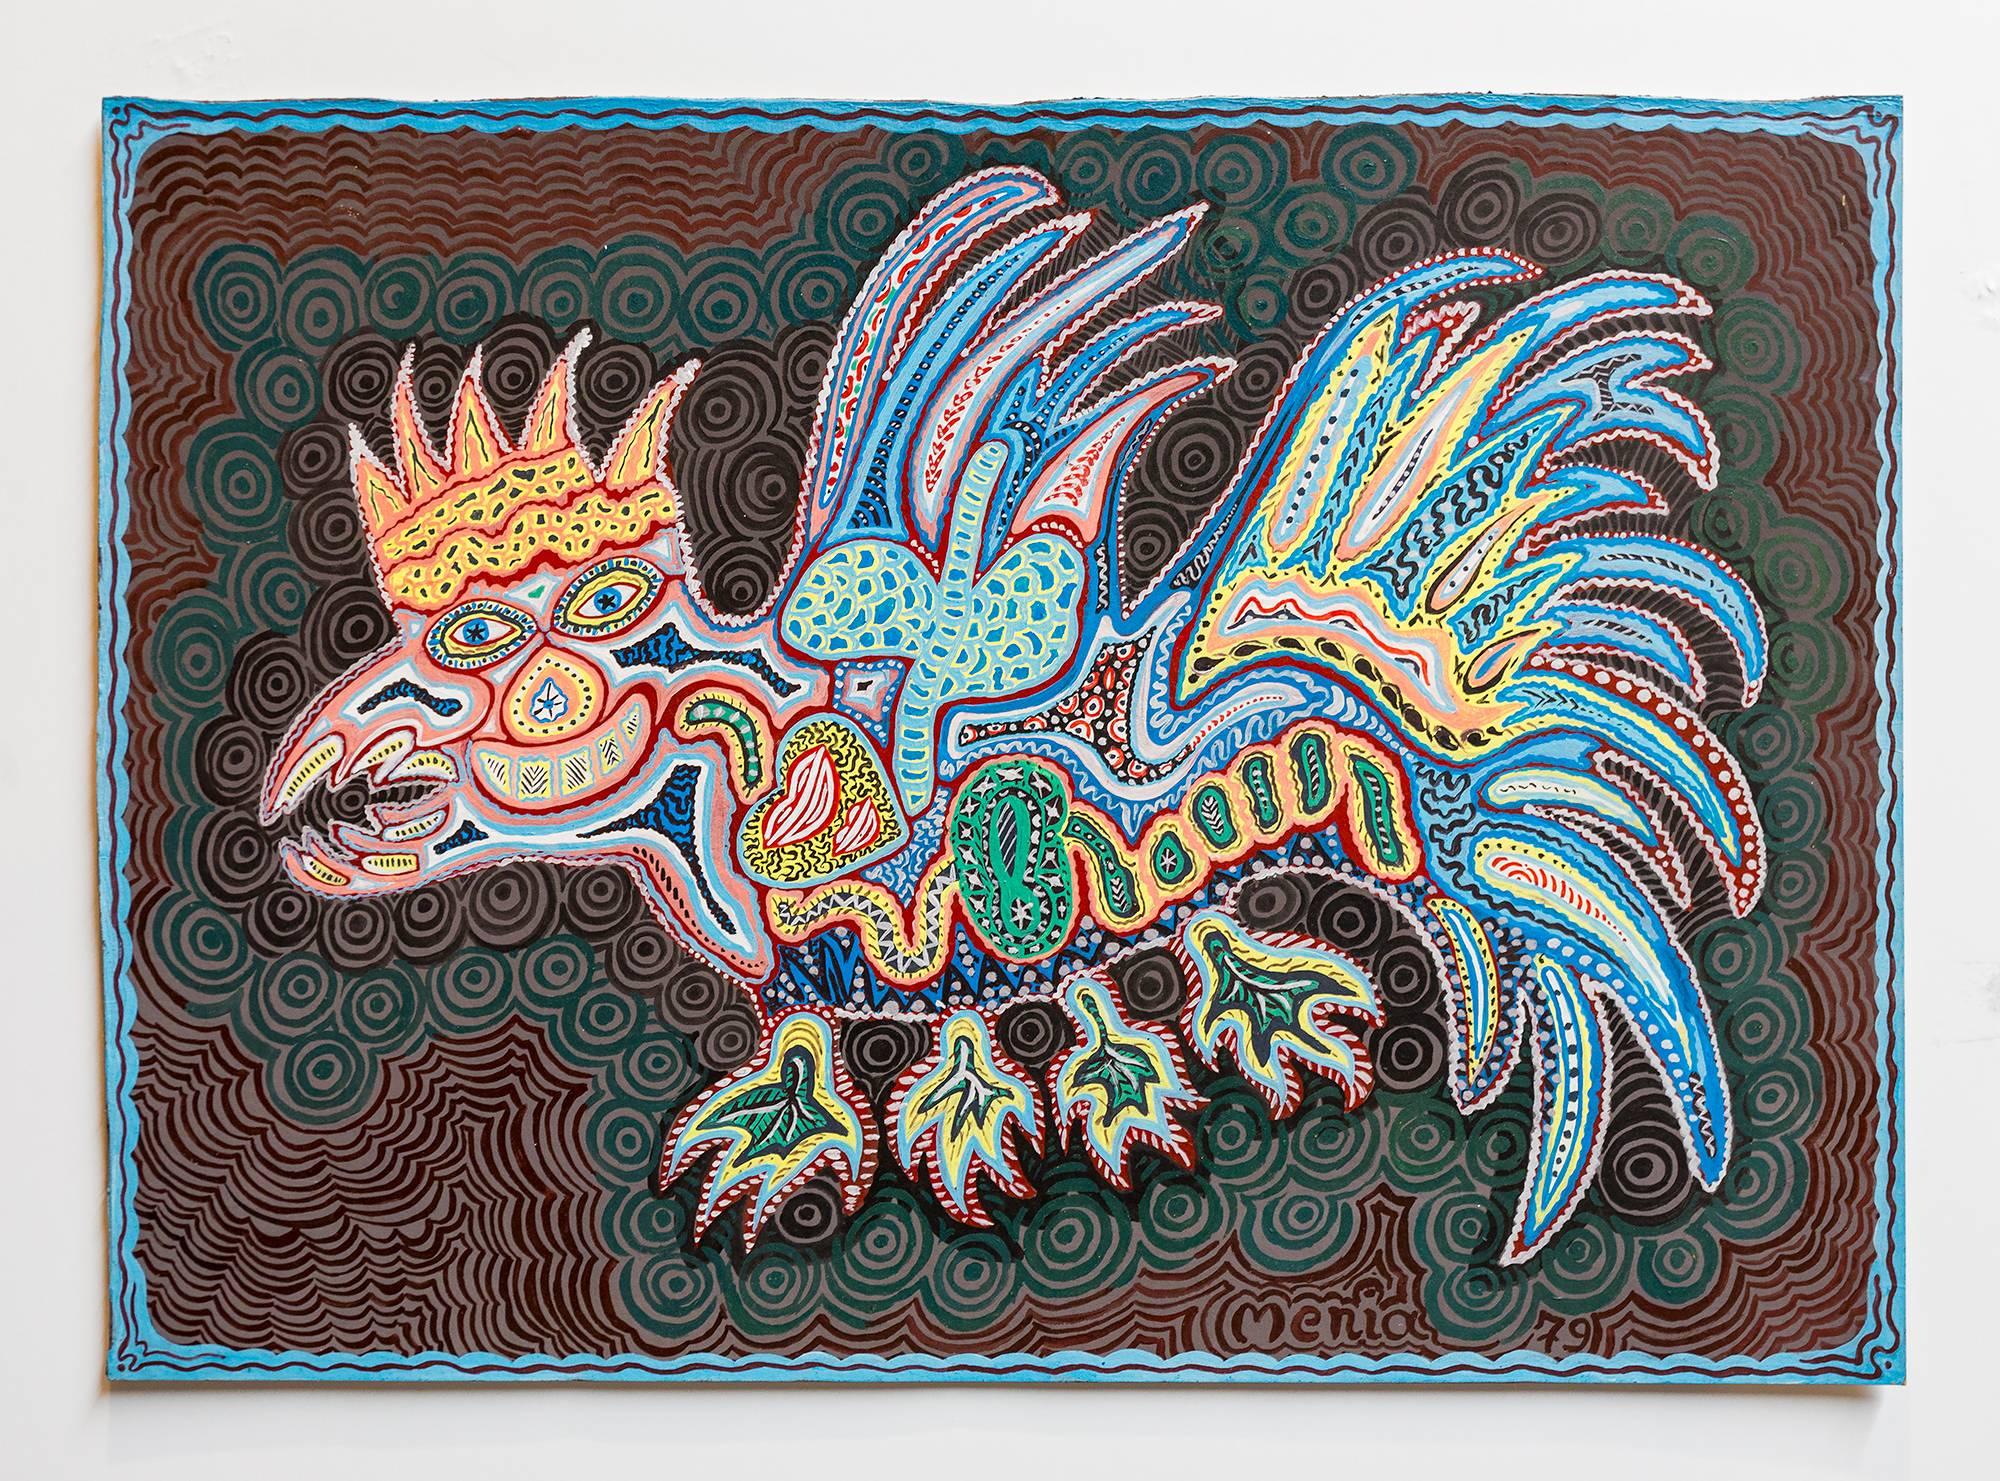 Menia Litvak Figurative Painting - Israeli Folk Art Bright Colorful Naive Dragon Painting